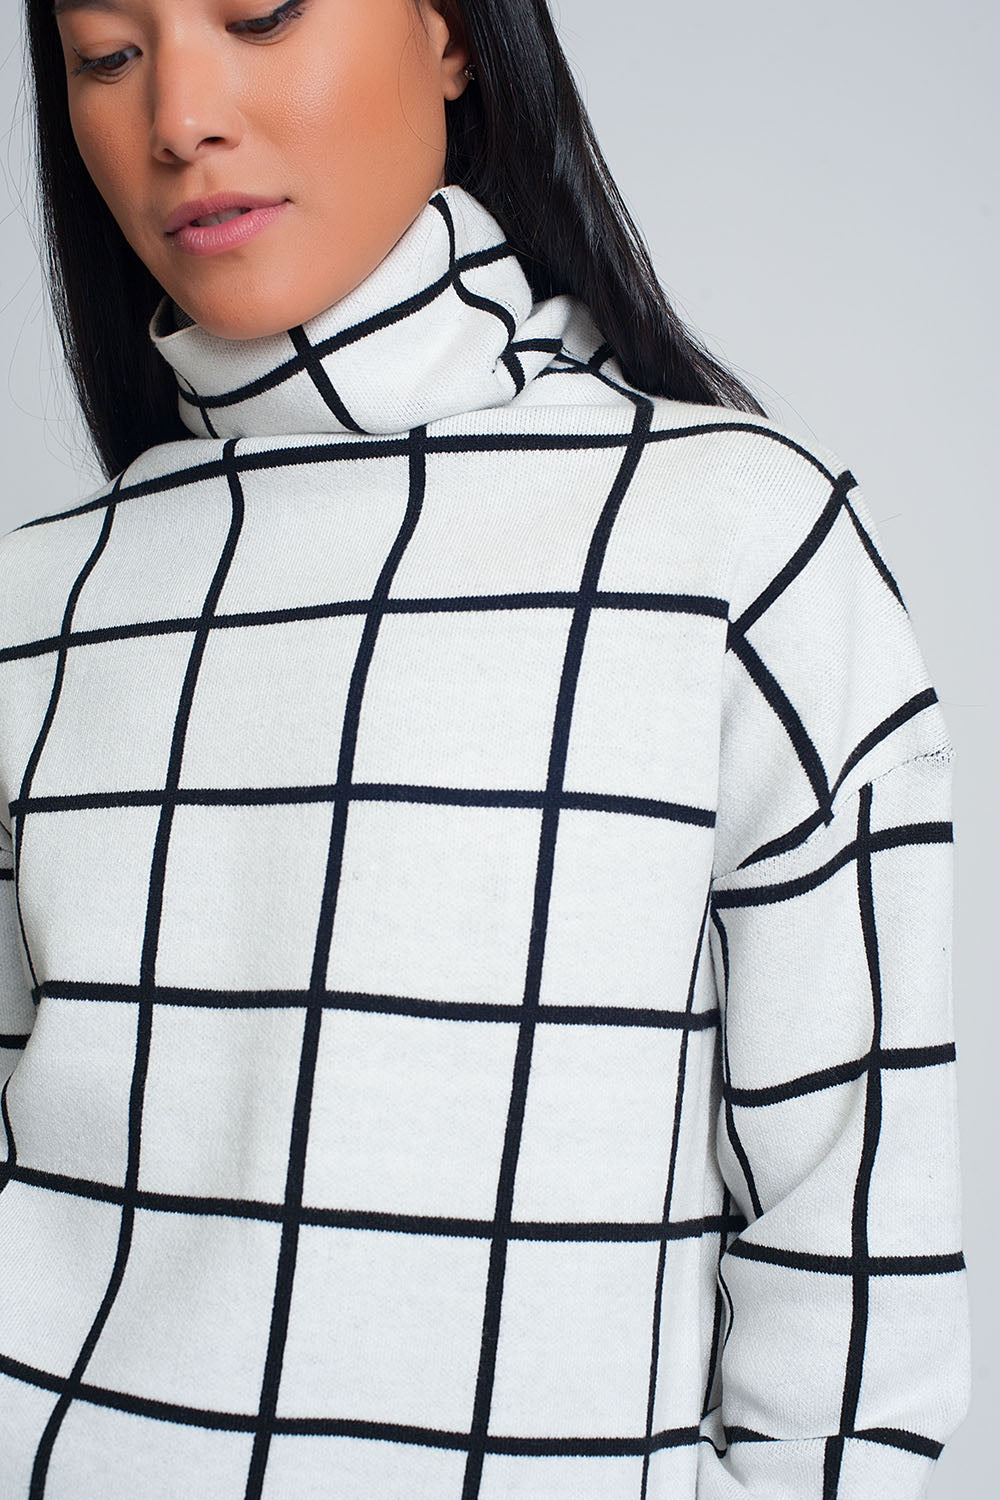 Checkered white turtleneck sweaterSweaters